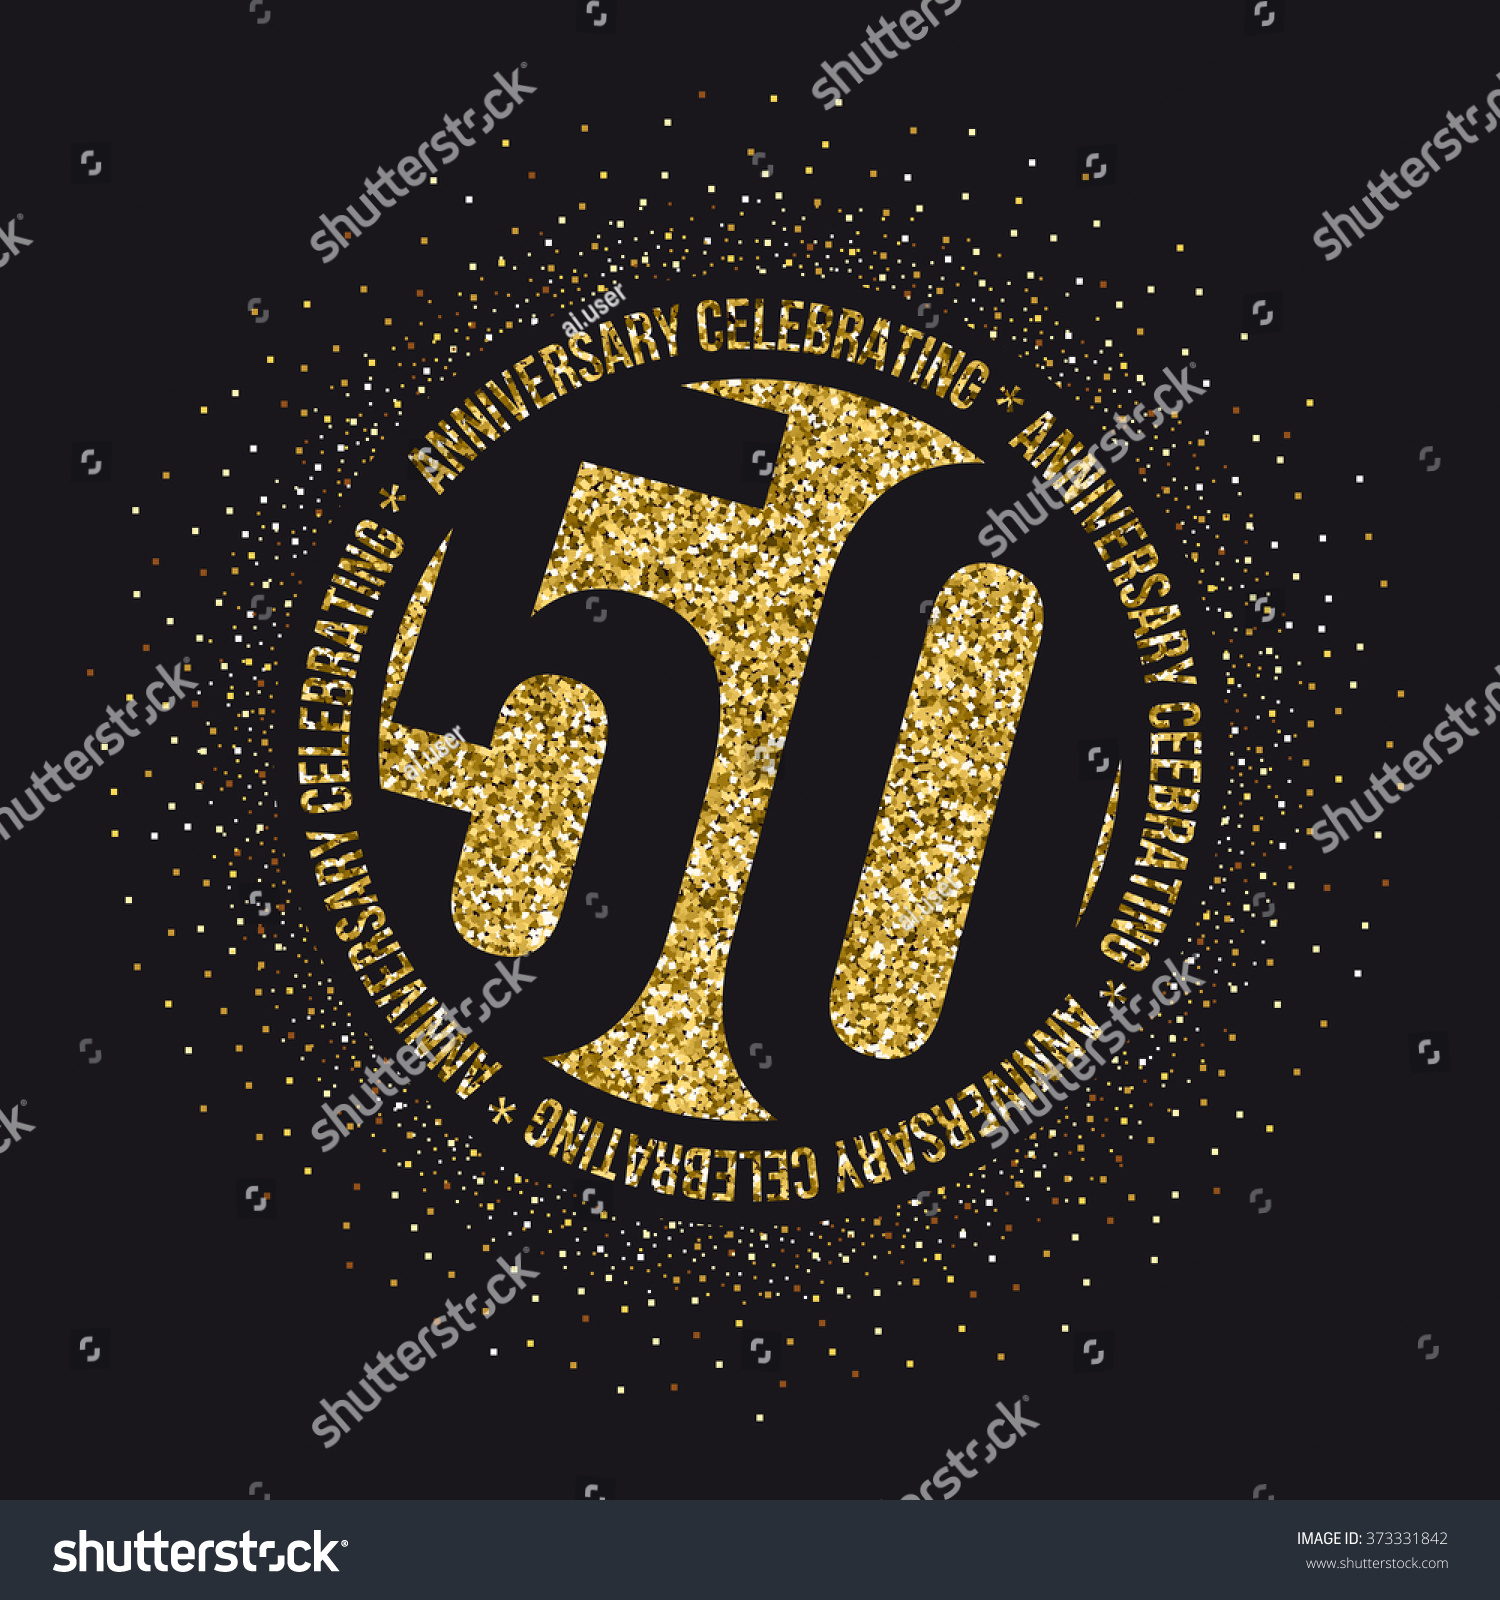 SVG of Fifty years anniversary celebration logotype. 50th anniversary logo. svg